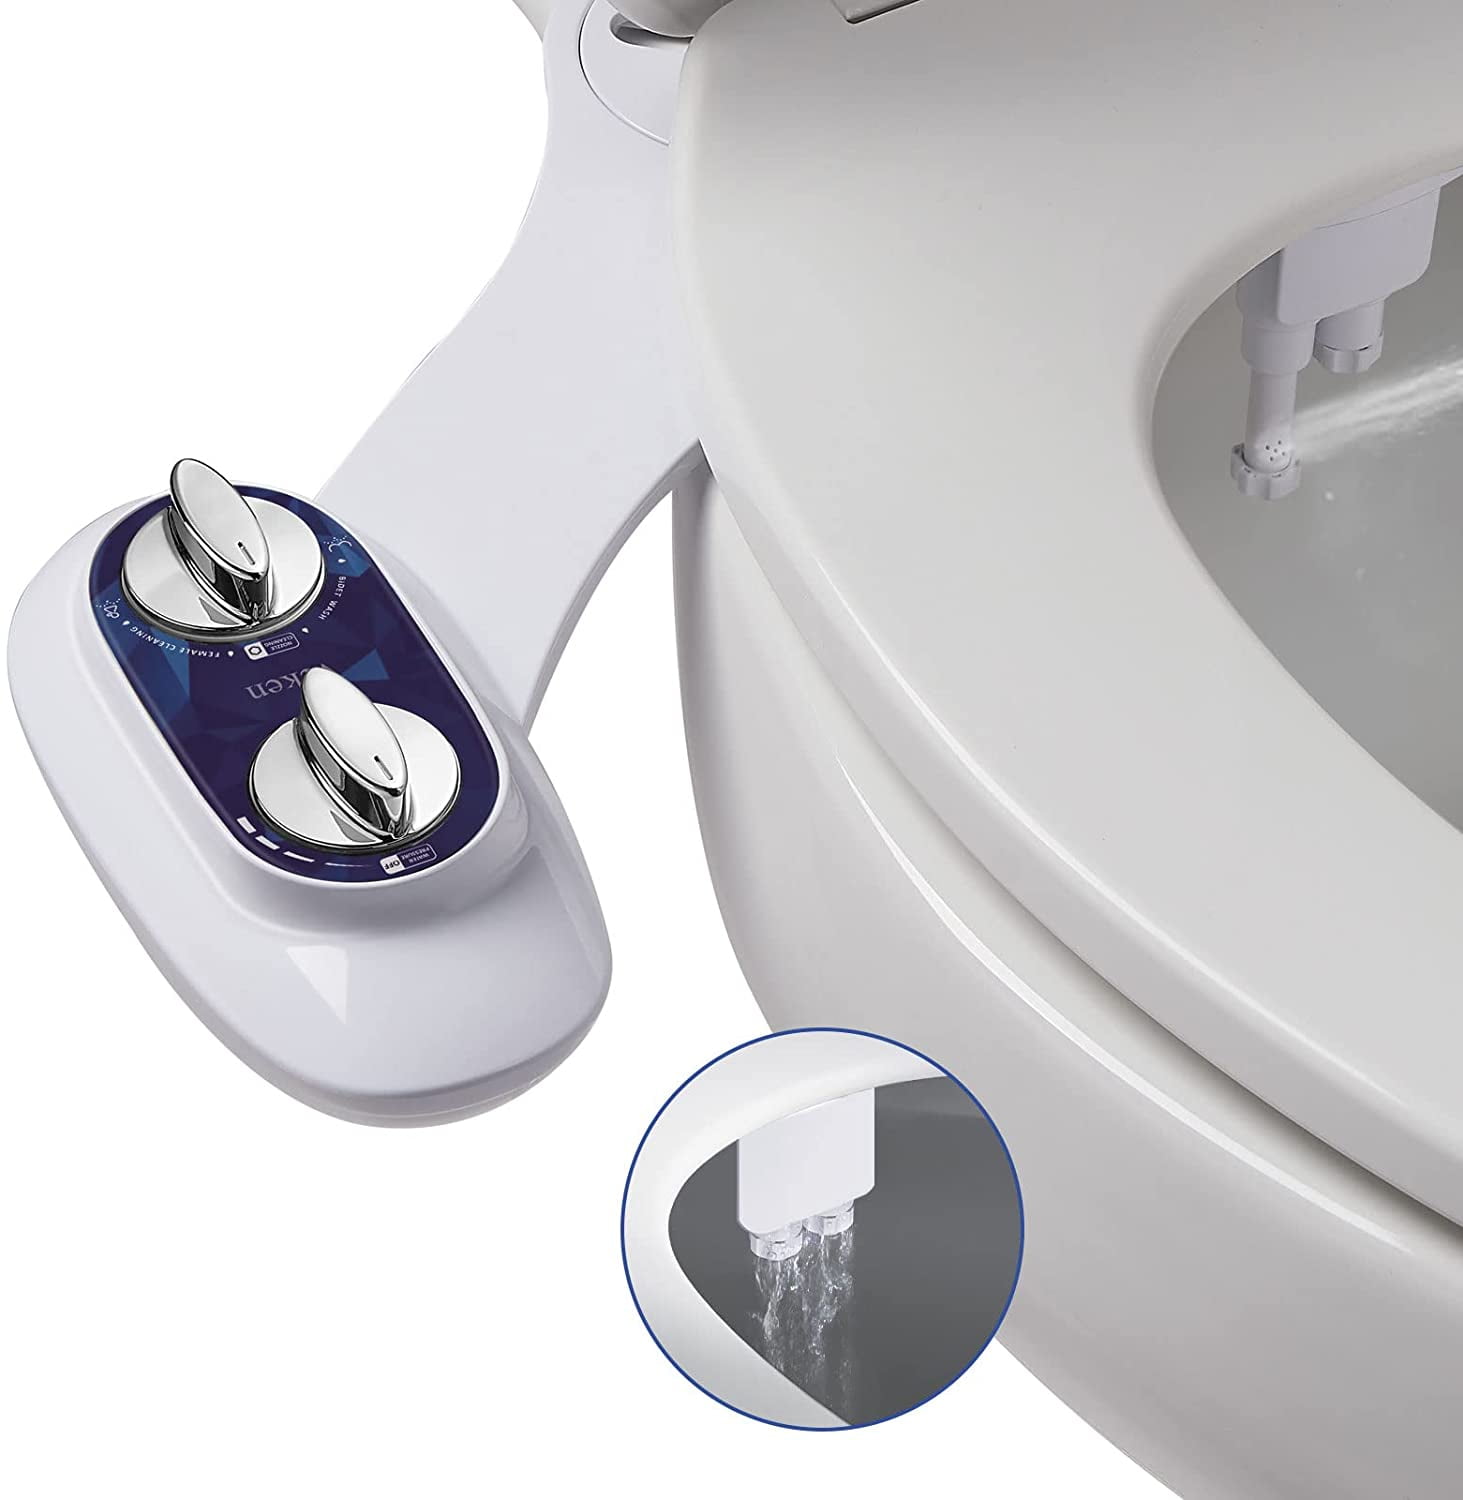 Veken Self-Cleaning Dual Nozzle (Feminine/Bidet Wash) Toilet Bidet Water Non-Electric Bidet Attachment for Toilet , Blue Walmart.com